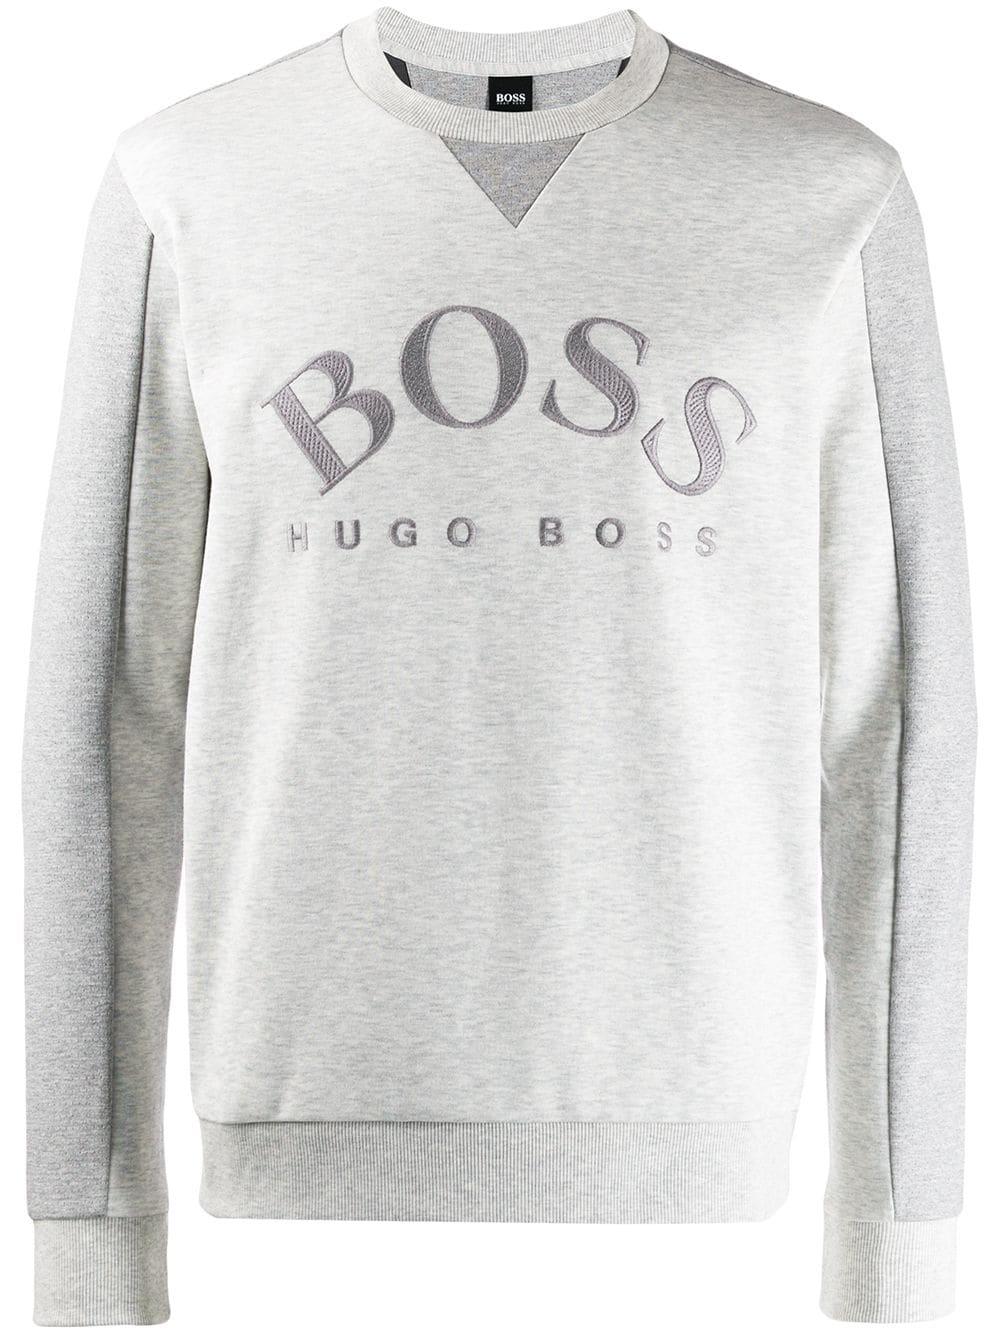 Hugo Boss Logo Crew Sweatshirt Deals, SAVE 54%.